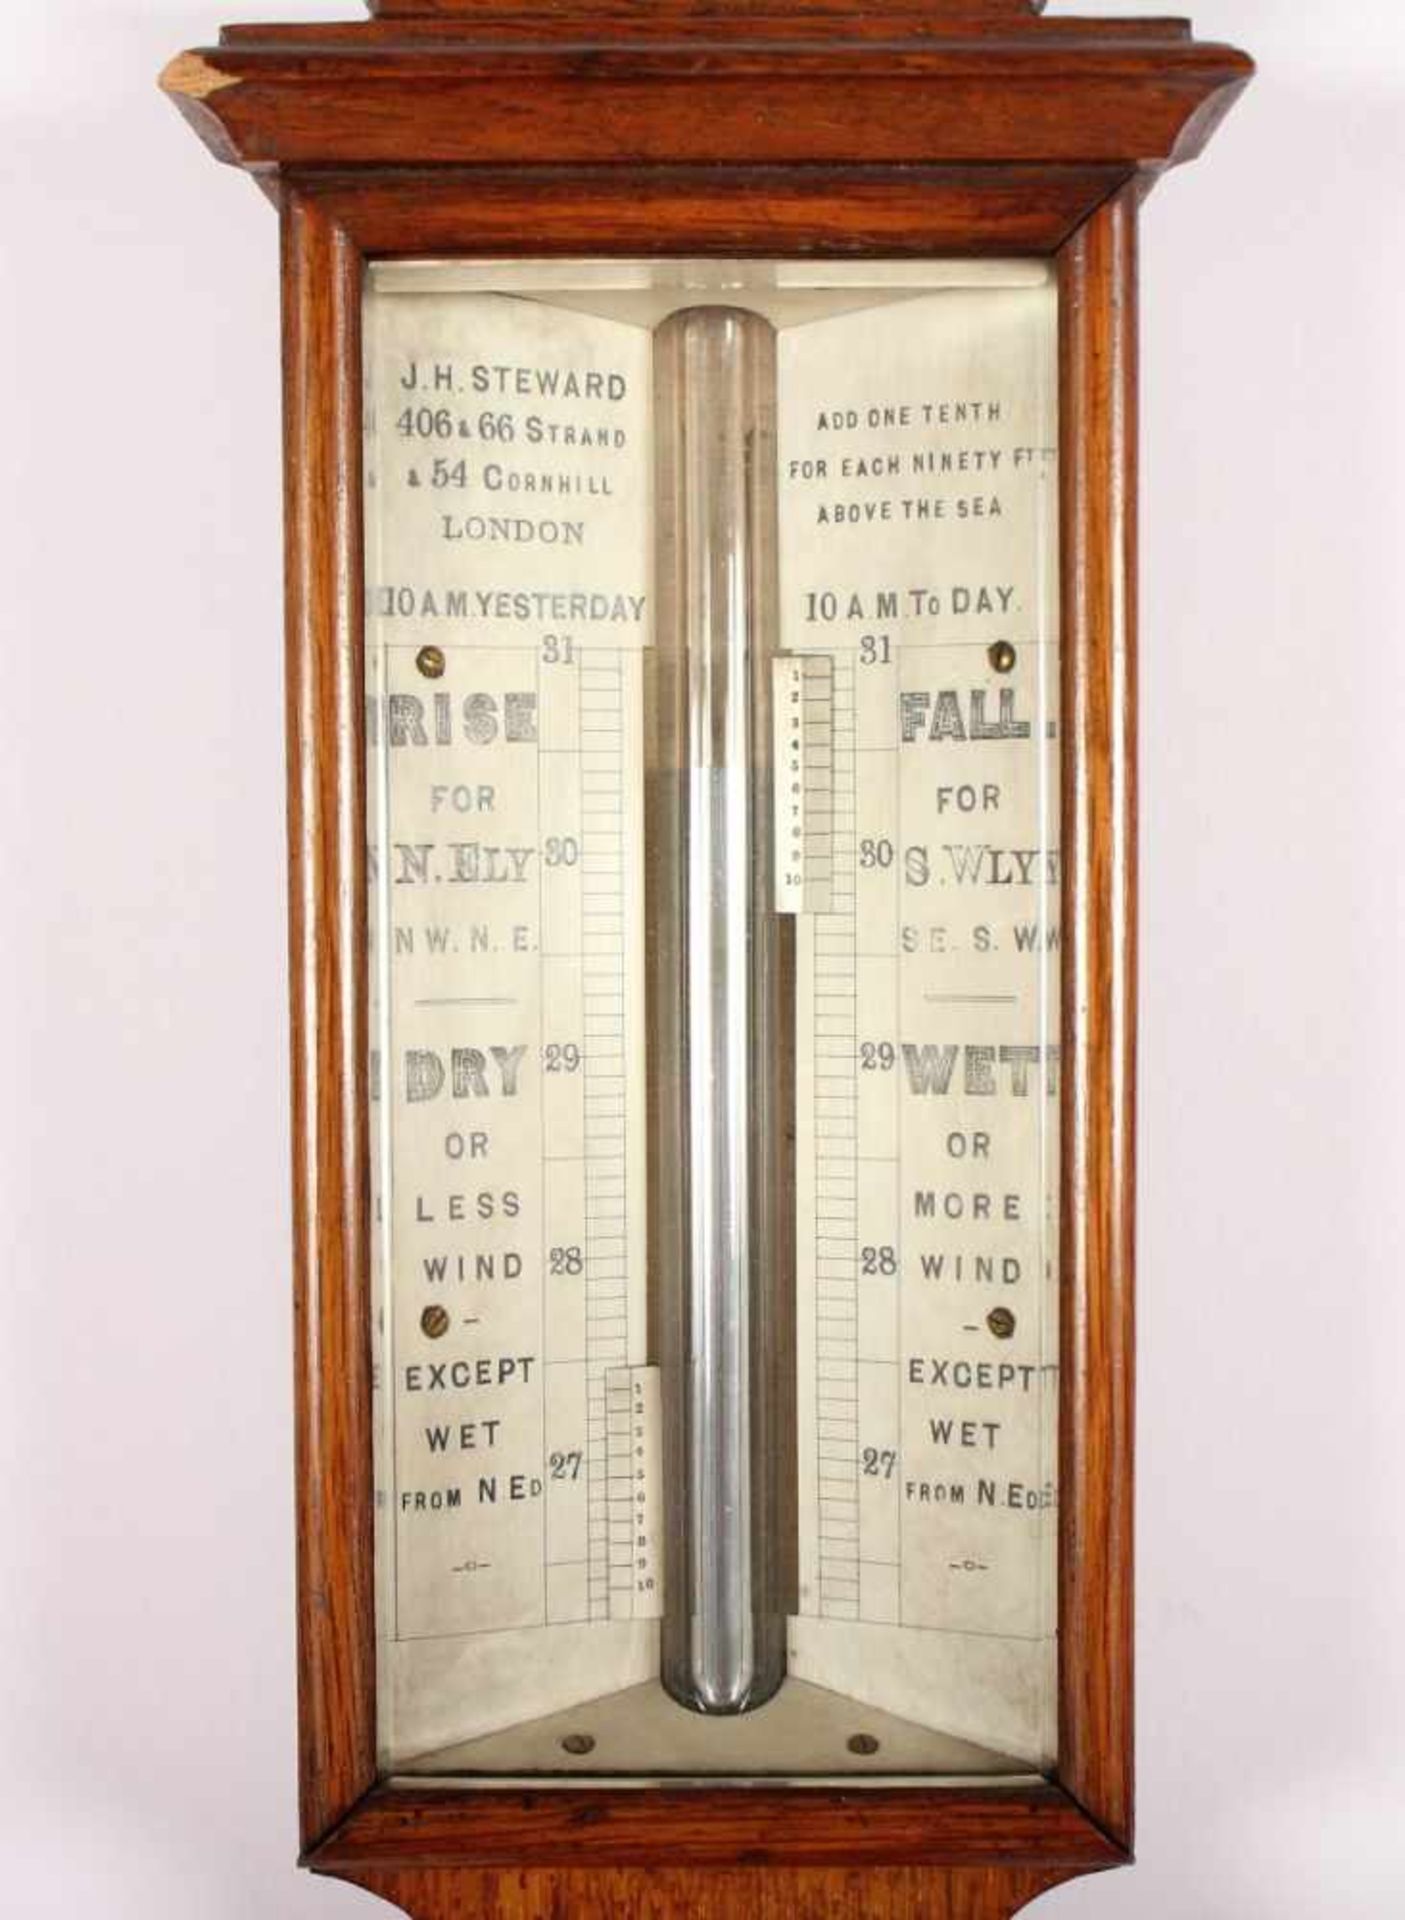 BAROMETER, Nussholzgehäuse, Quecksilbersäule, Thermometer, min.besch., L 95, J.H. STEWARD, LONDON, - Image 2 of 3